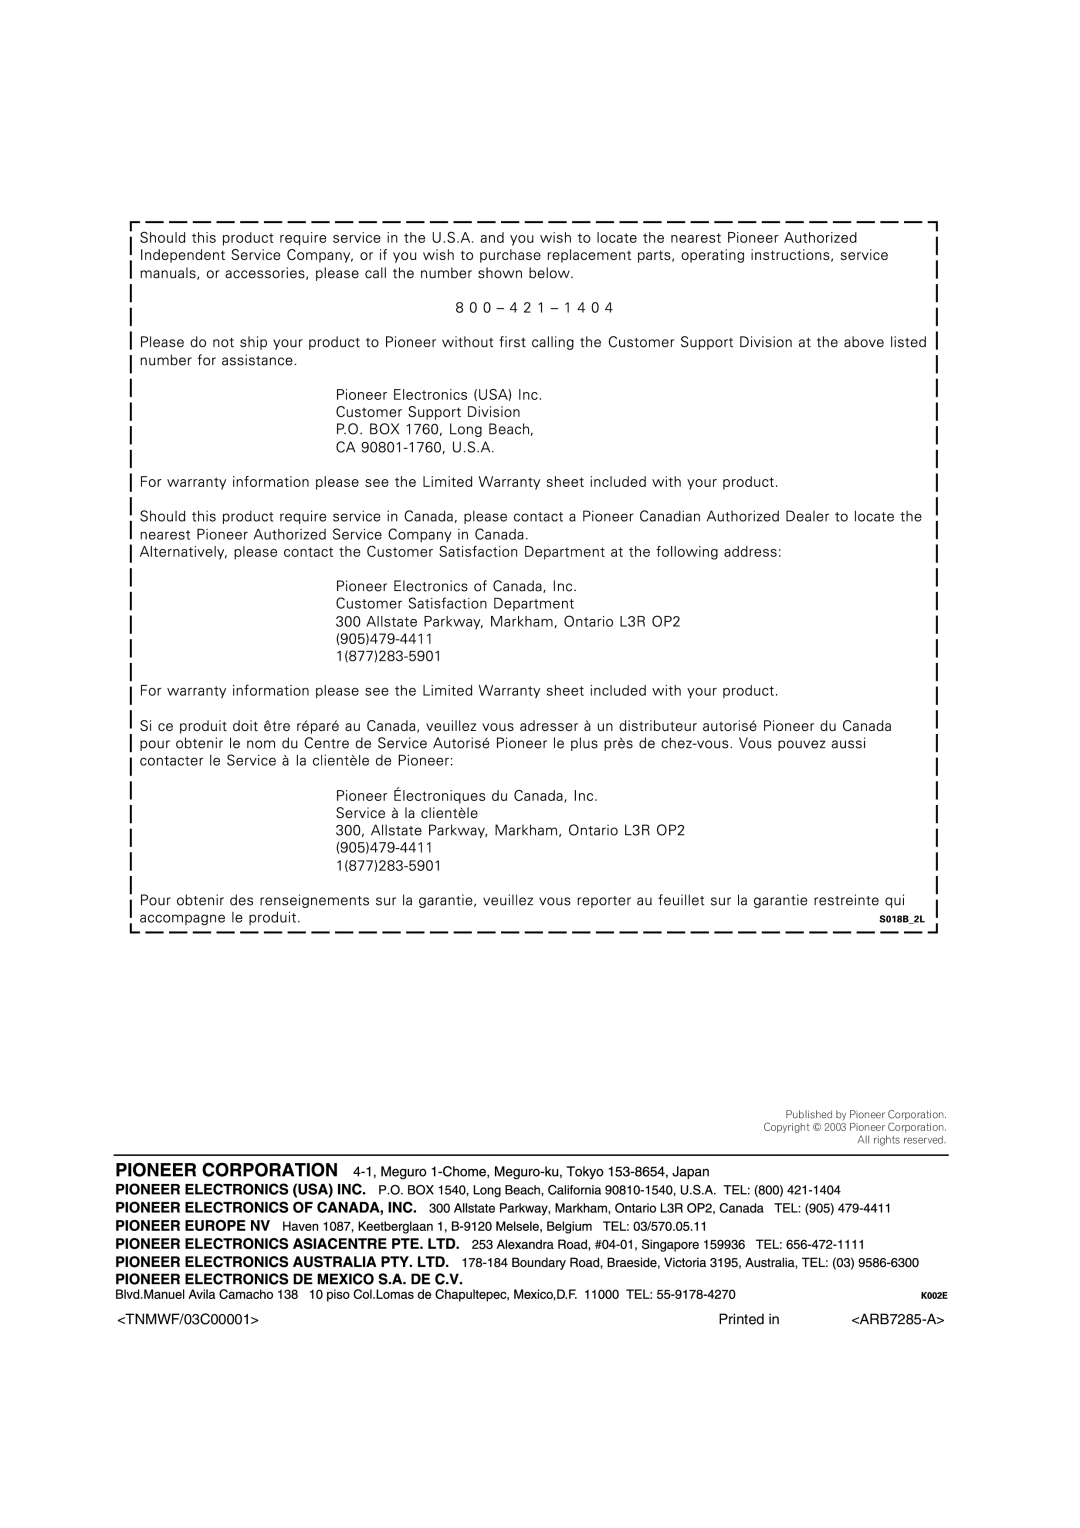 Pioneer VSX-53TX manual <TNMWF/03C00001>, Printed in, <ARB7285-A> 